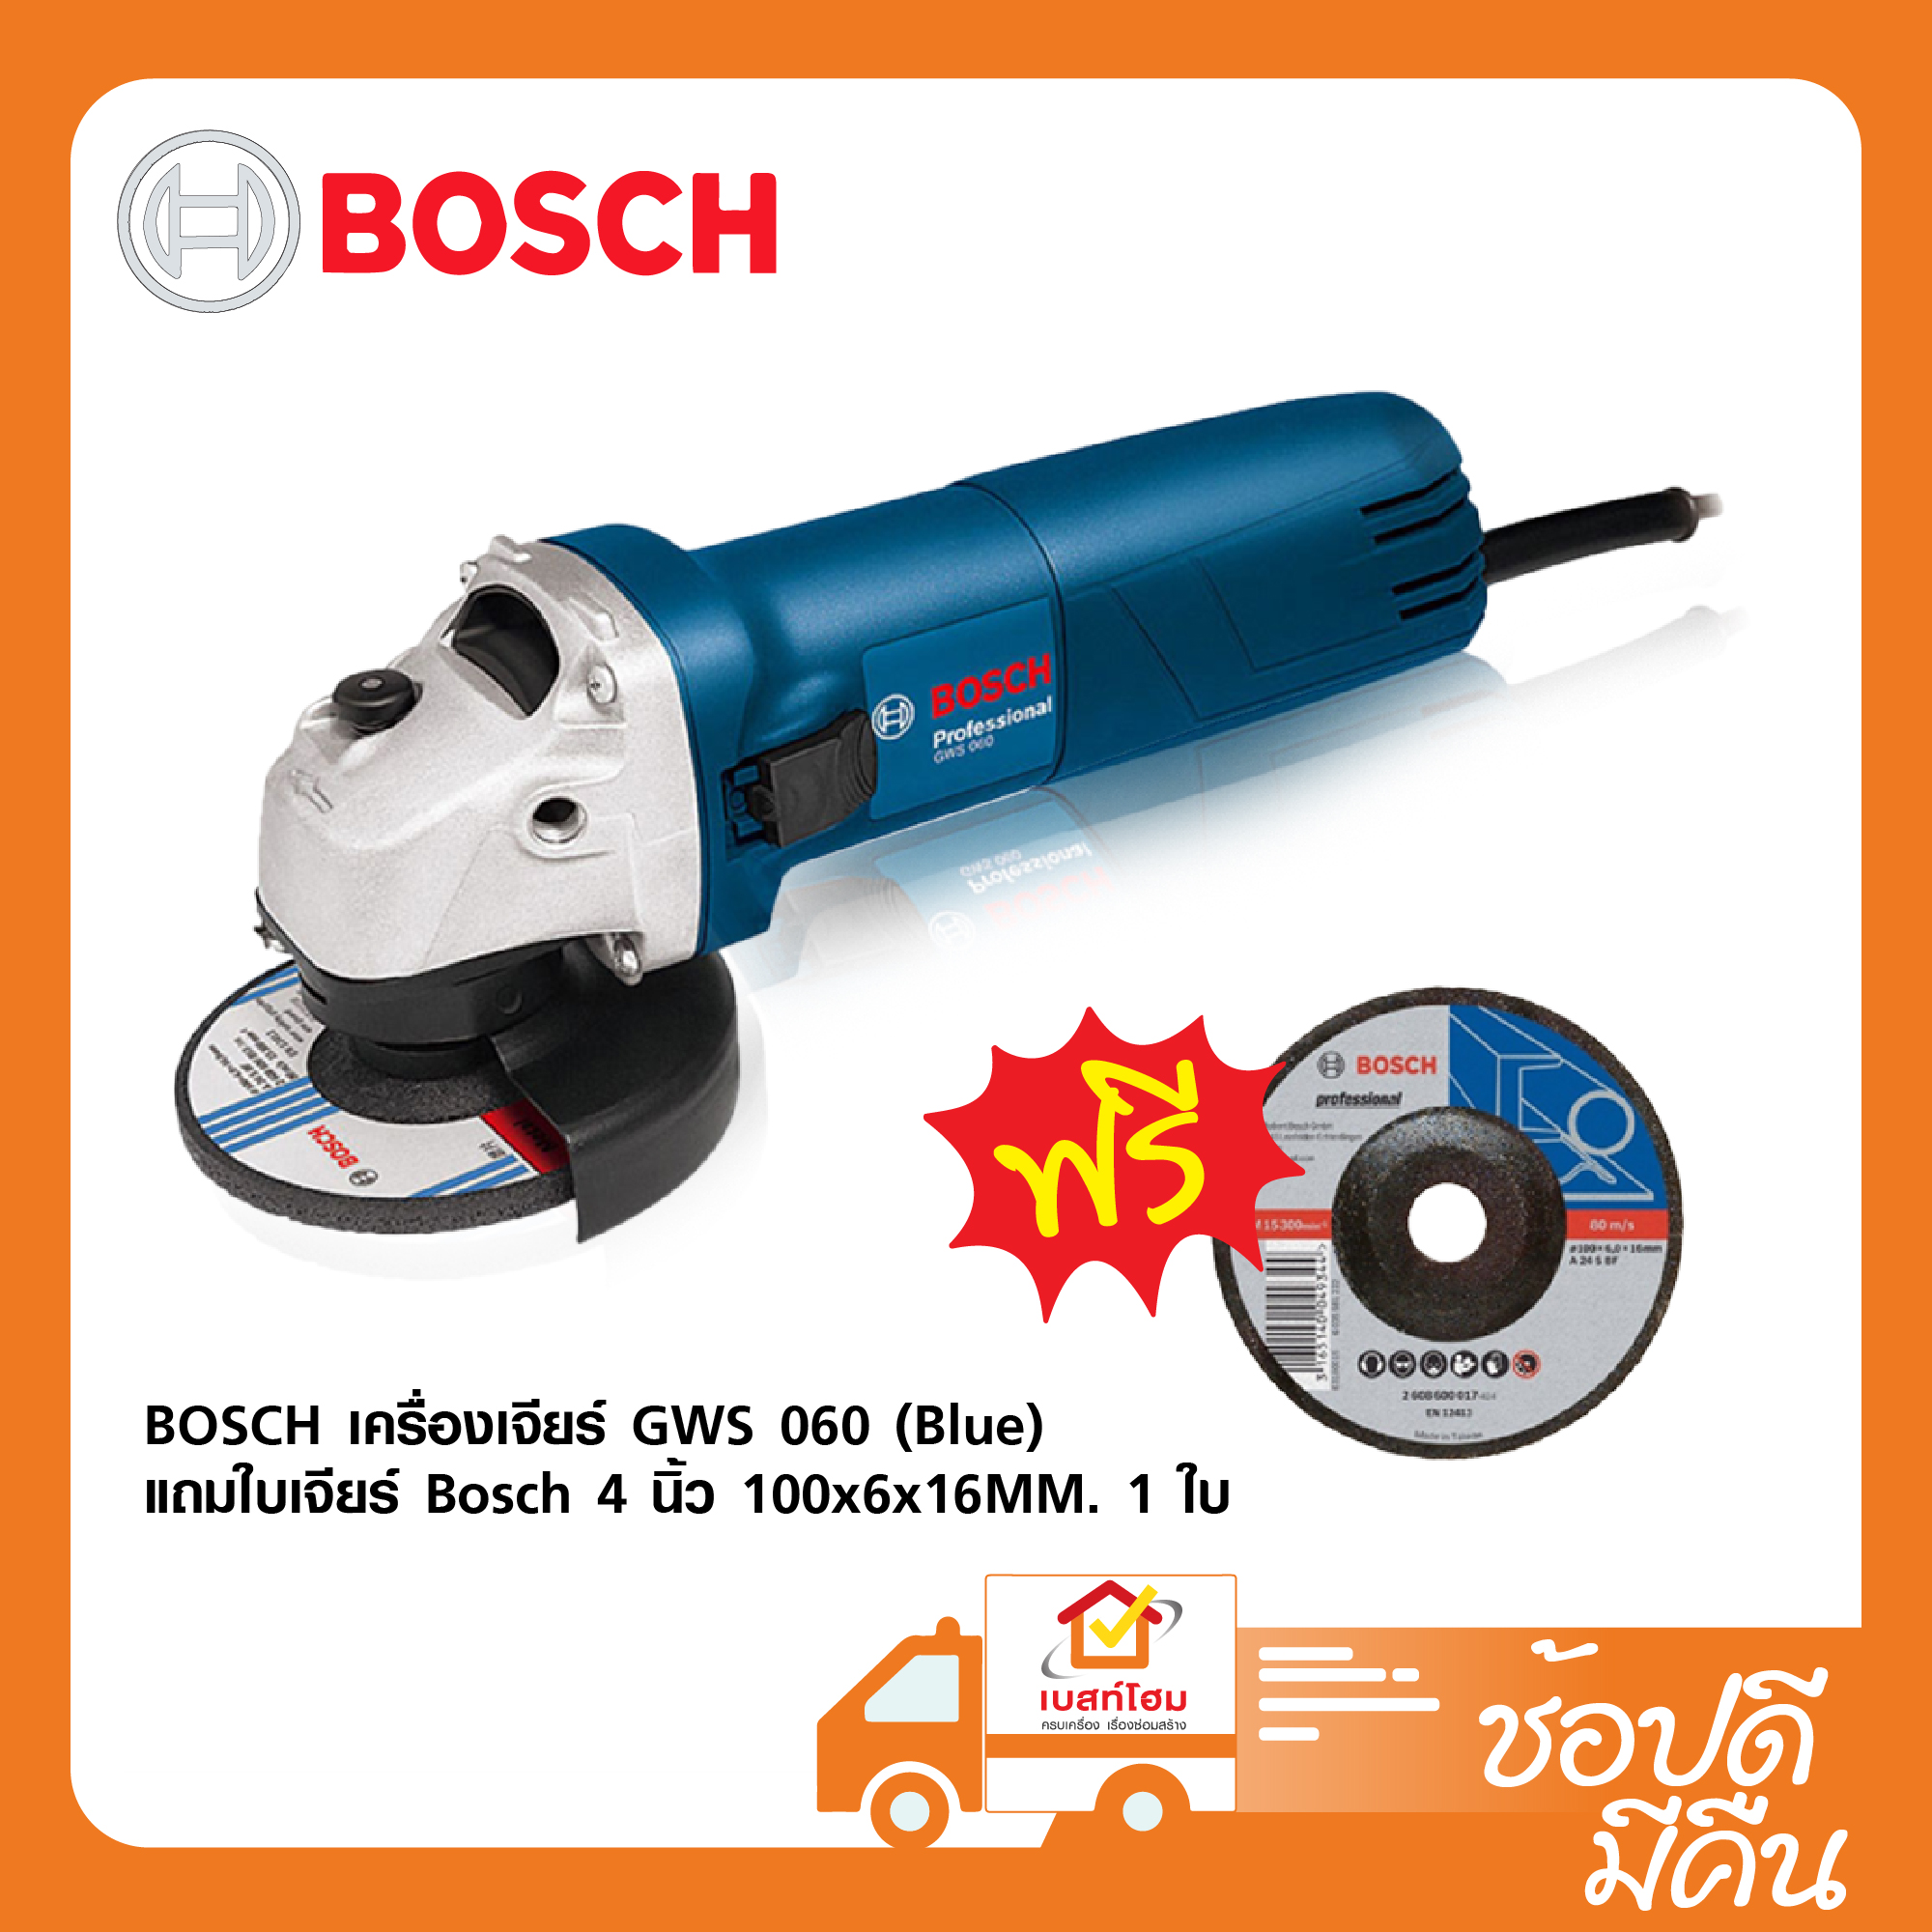 BOSCH เครื่องเจียร์ GWS 060 (Blue) แถมใบเจียร์ Bosch 4 นิ้ว 100x6x16MM. 1 ใบ